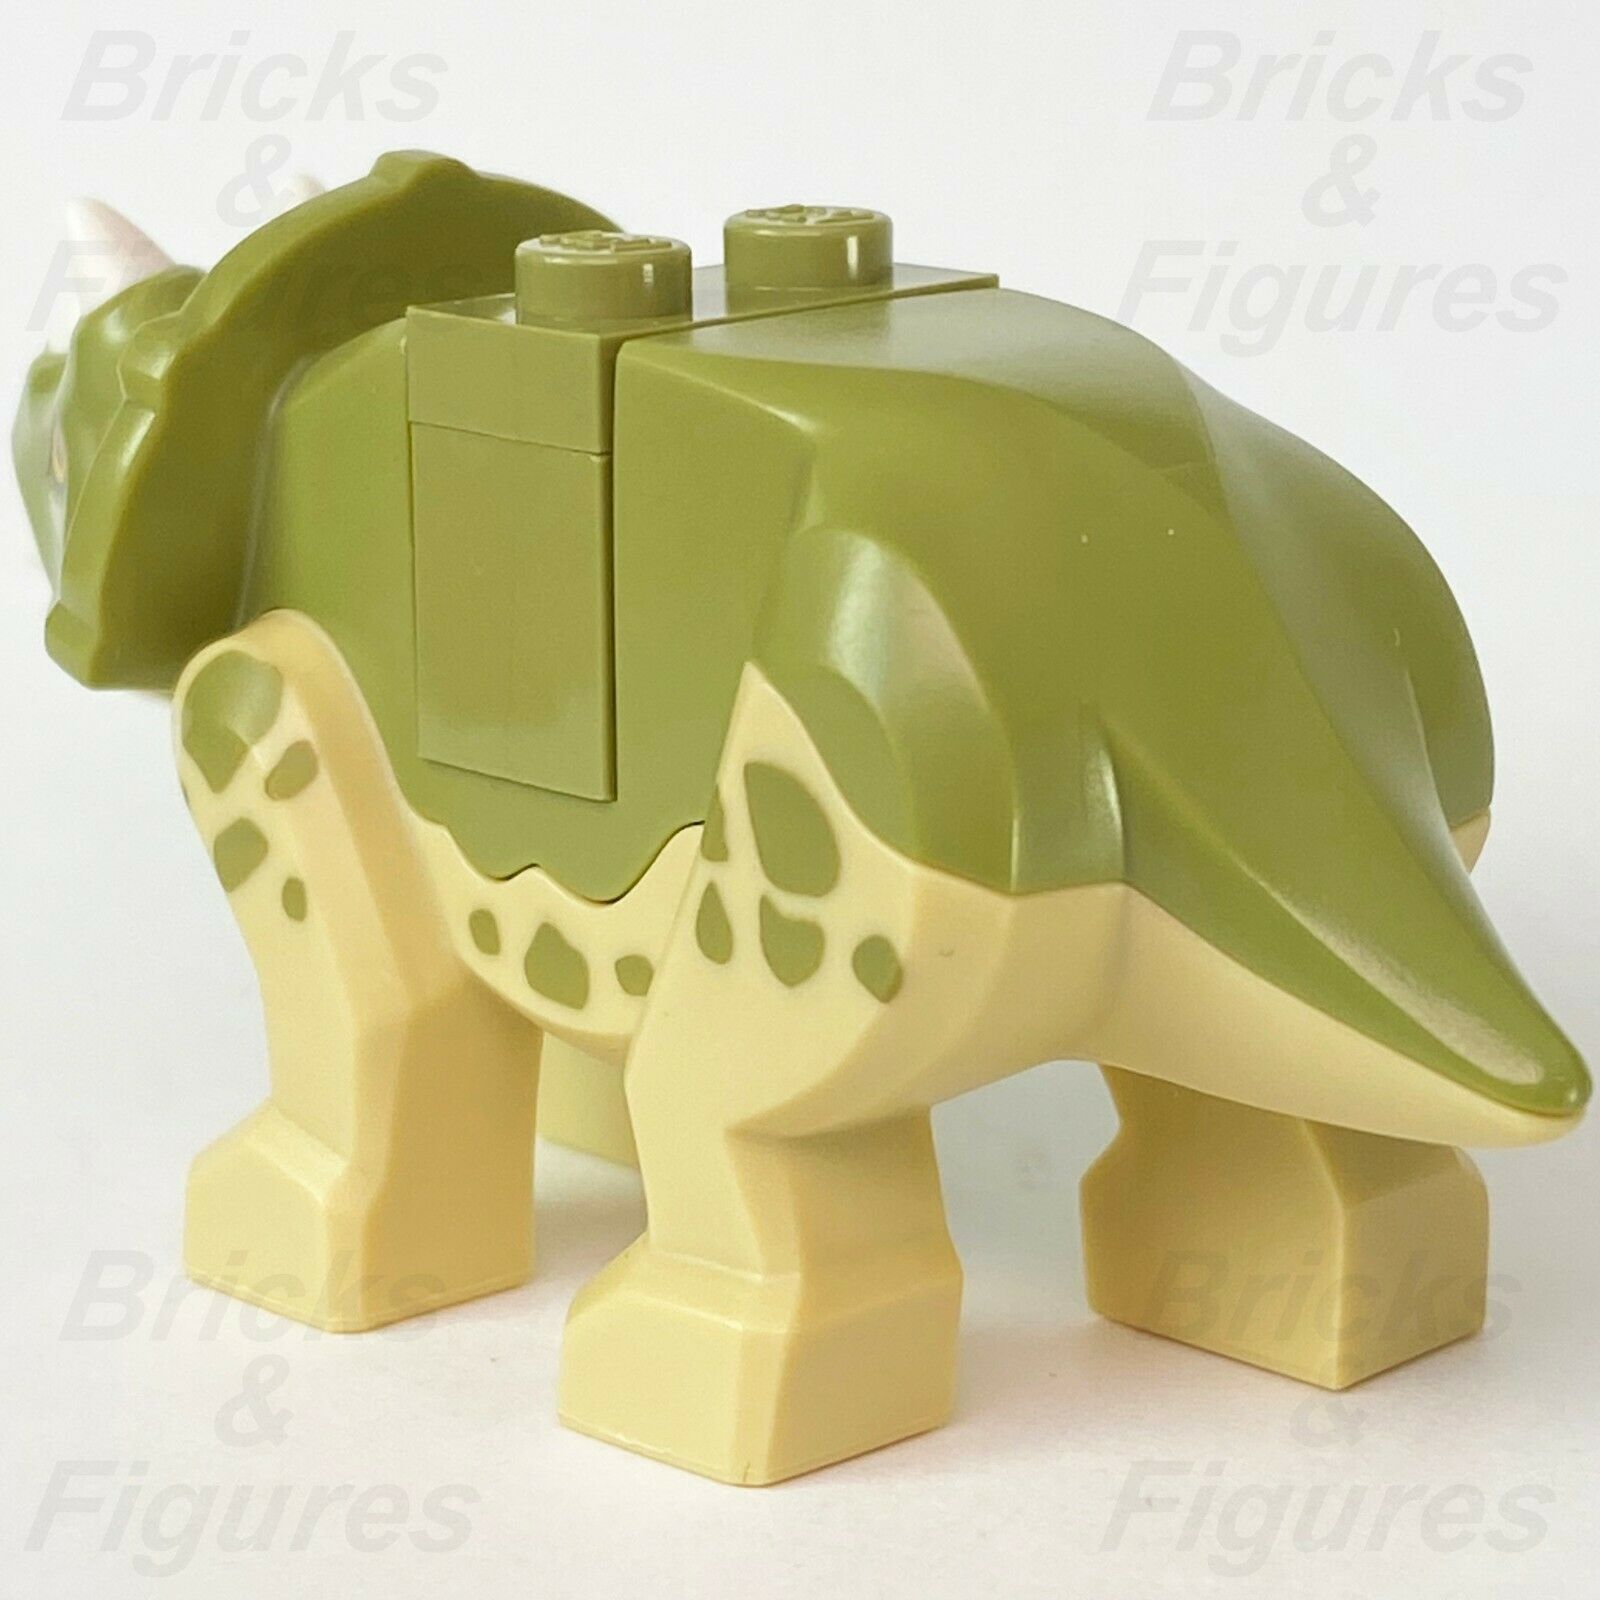 New Jurassic World LEGO Baby Triceratops Dinosaur from set 75939 - Bricks & Figures